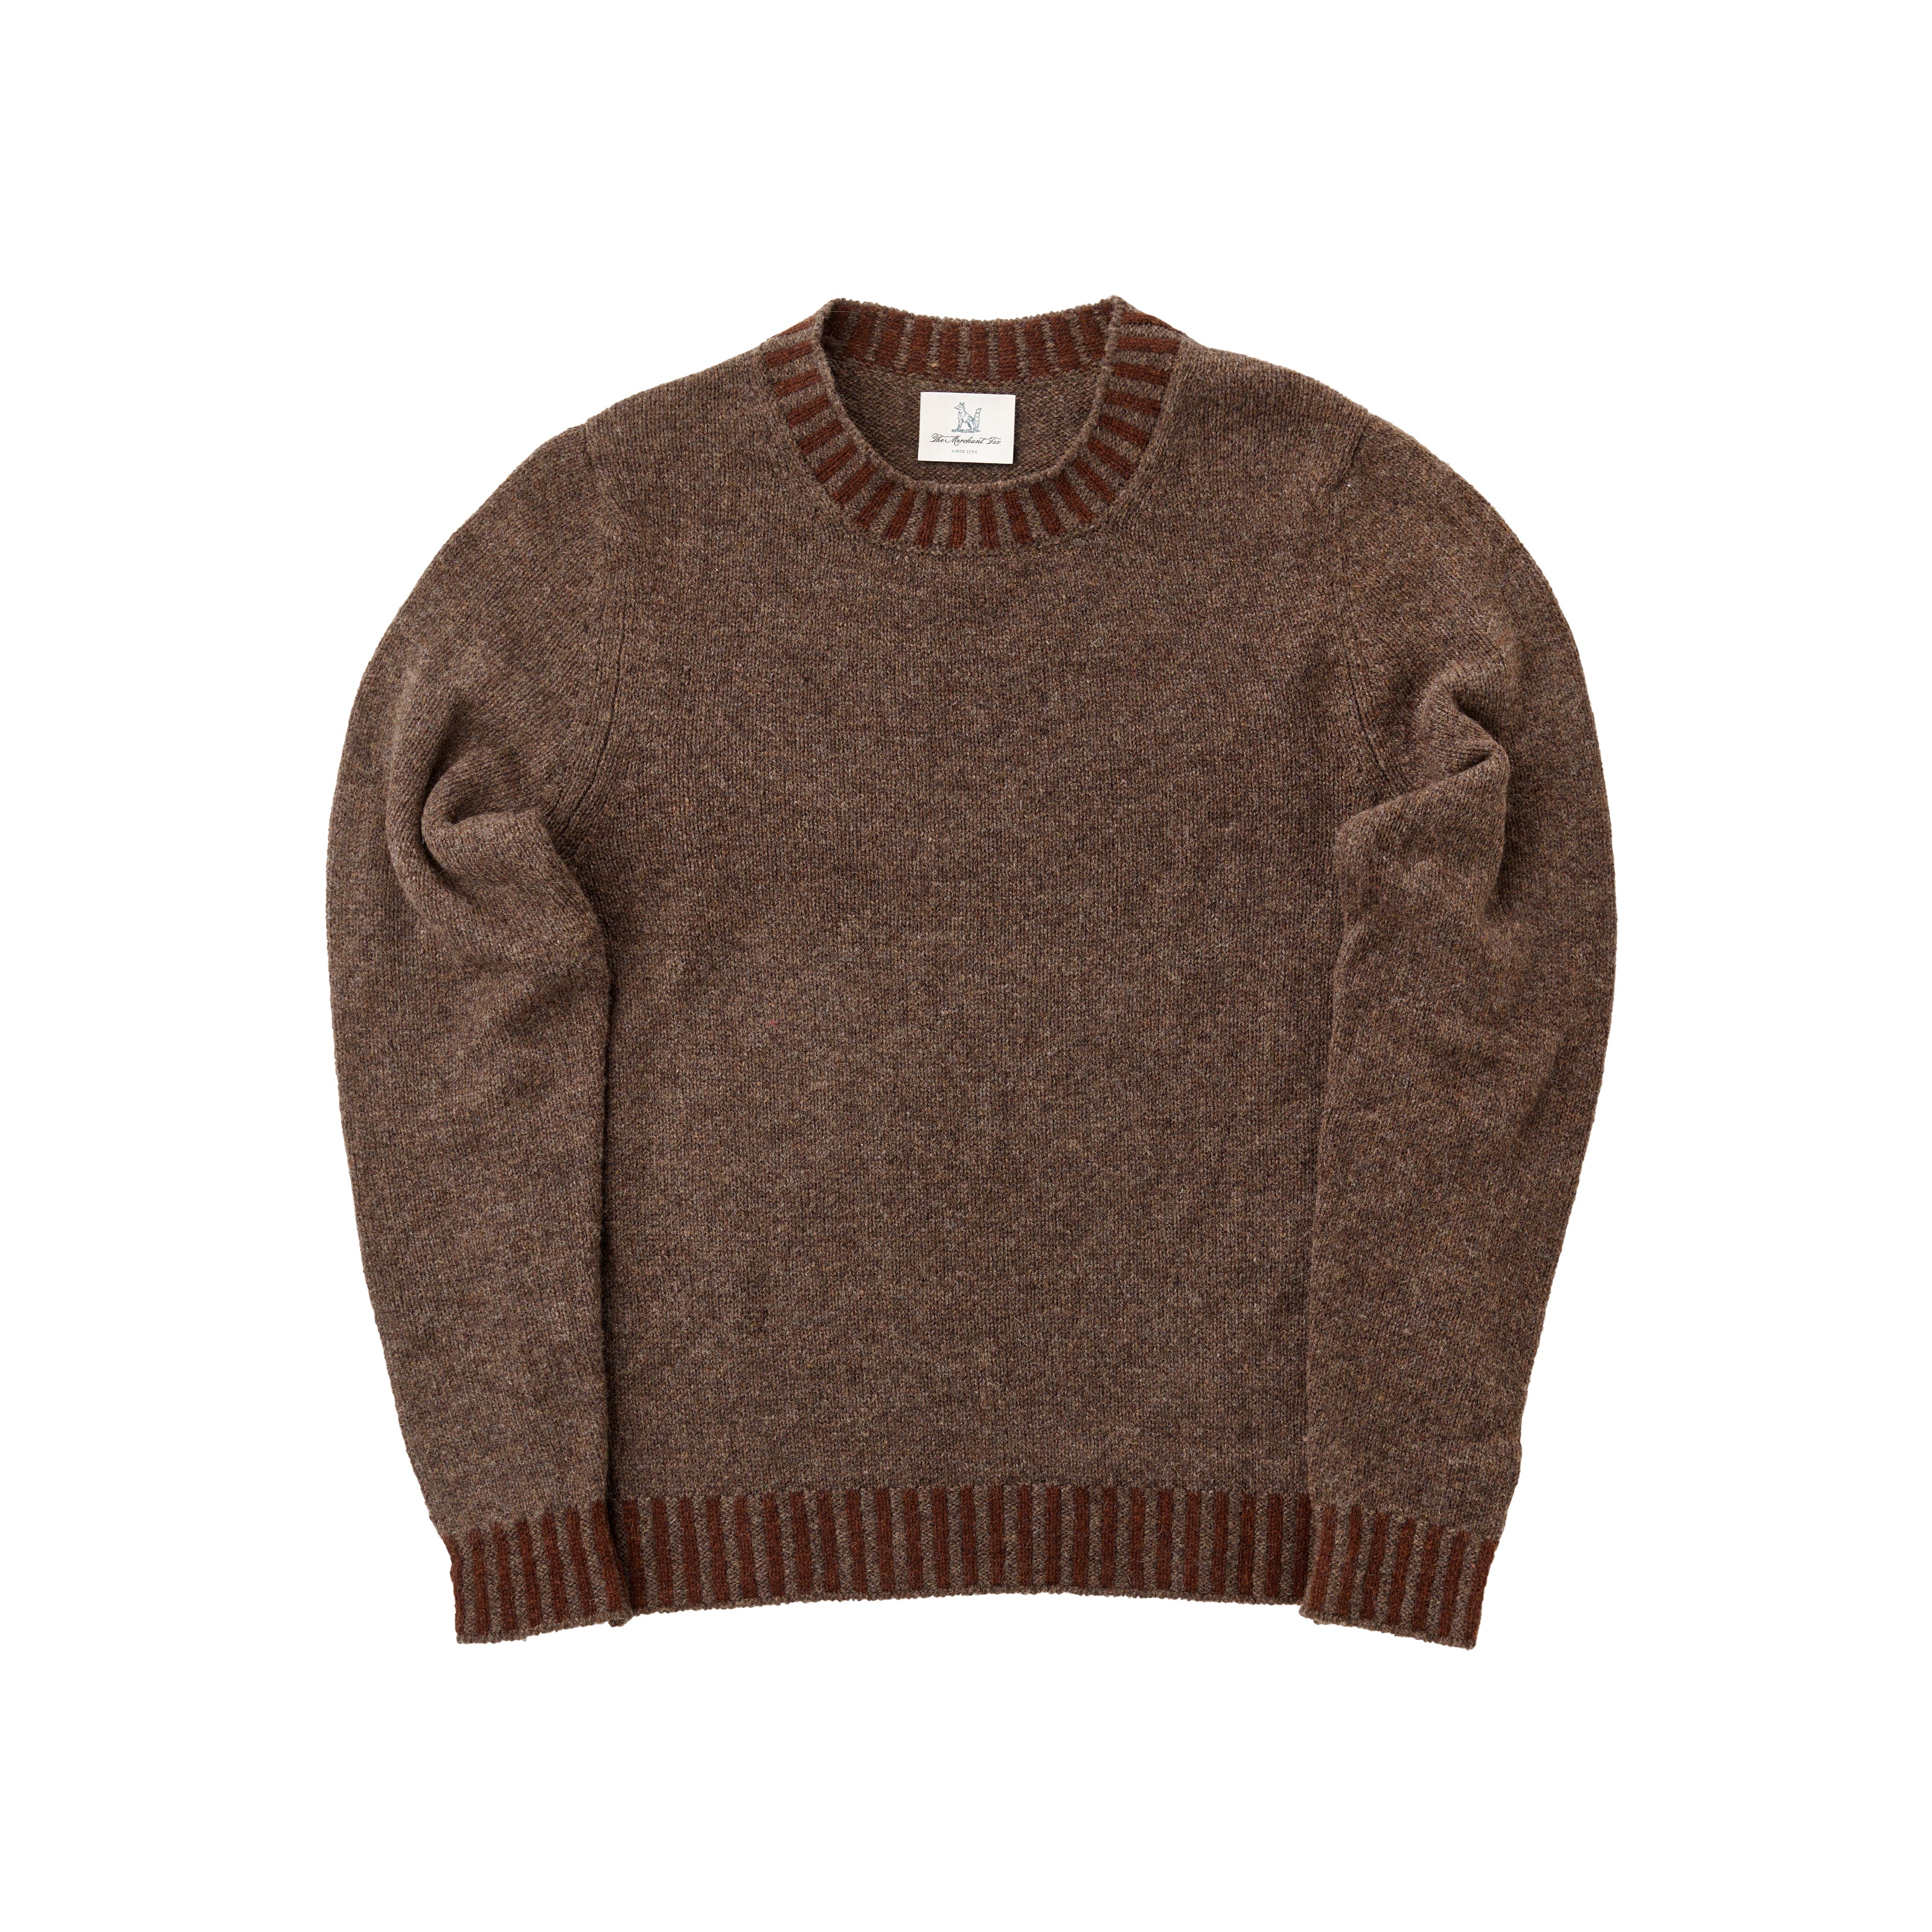 The Jedburgh Sweater in Hazel WIllow